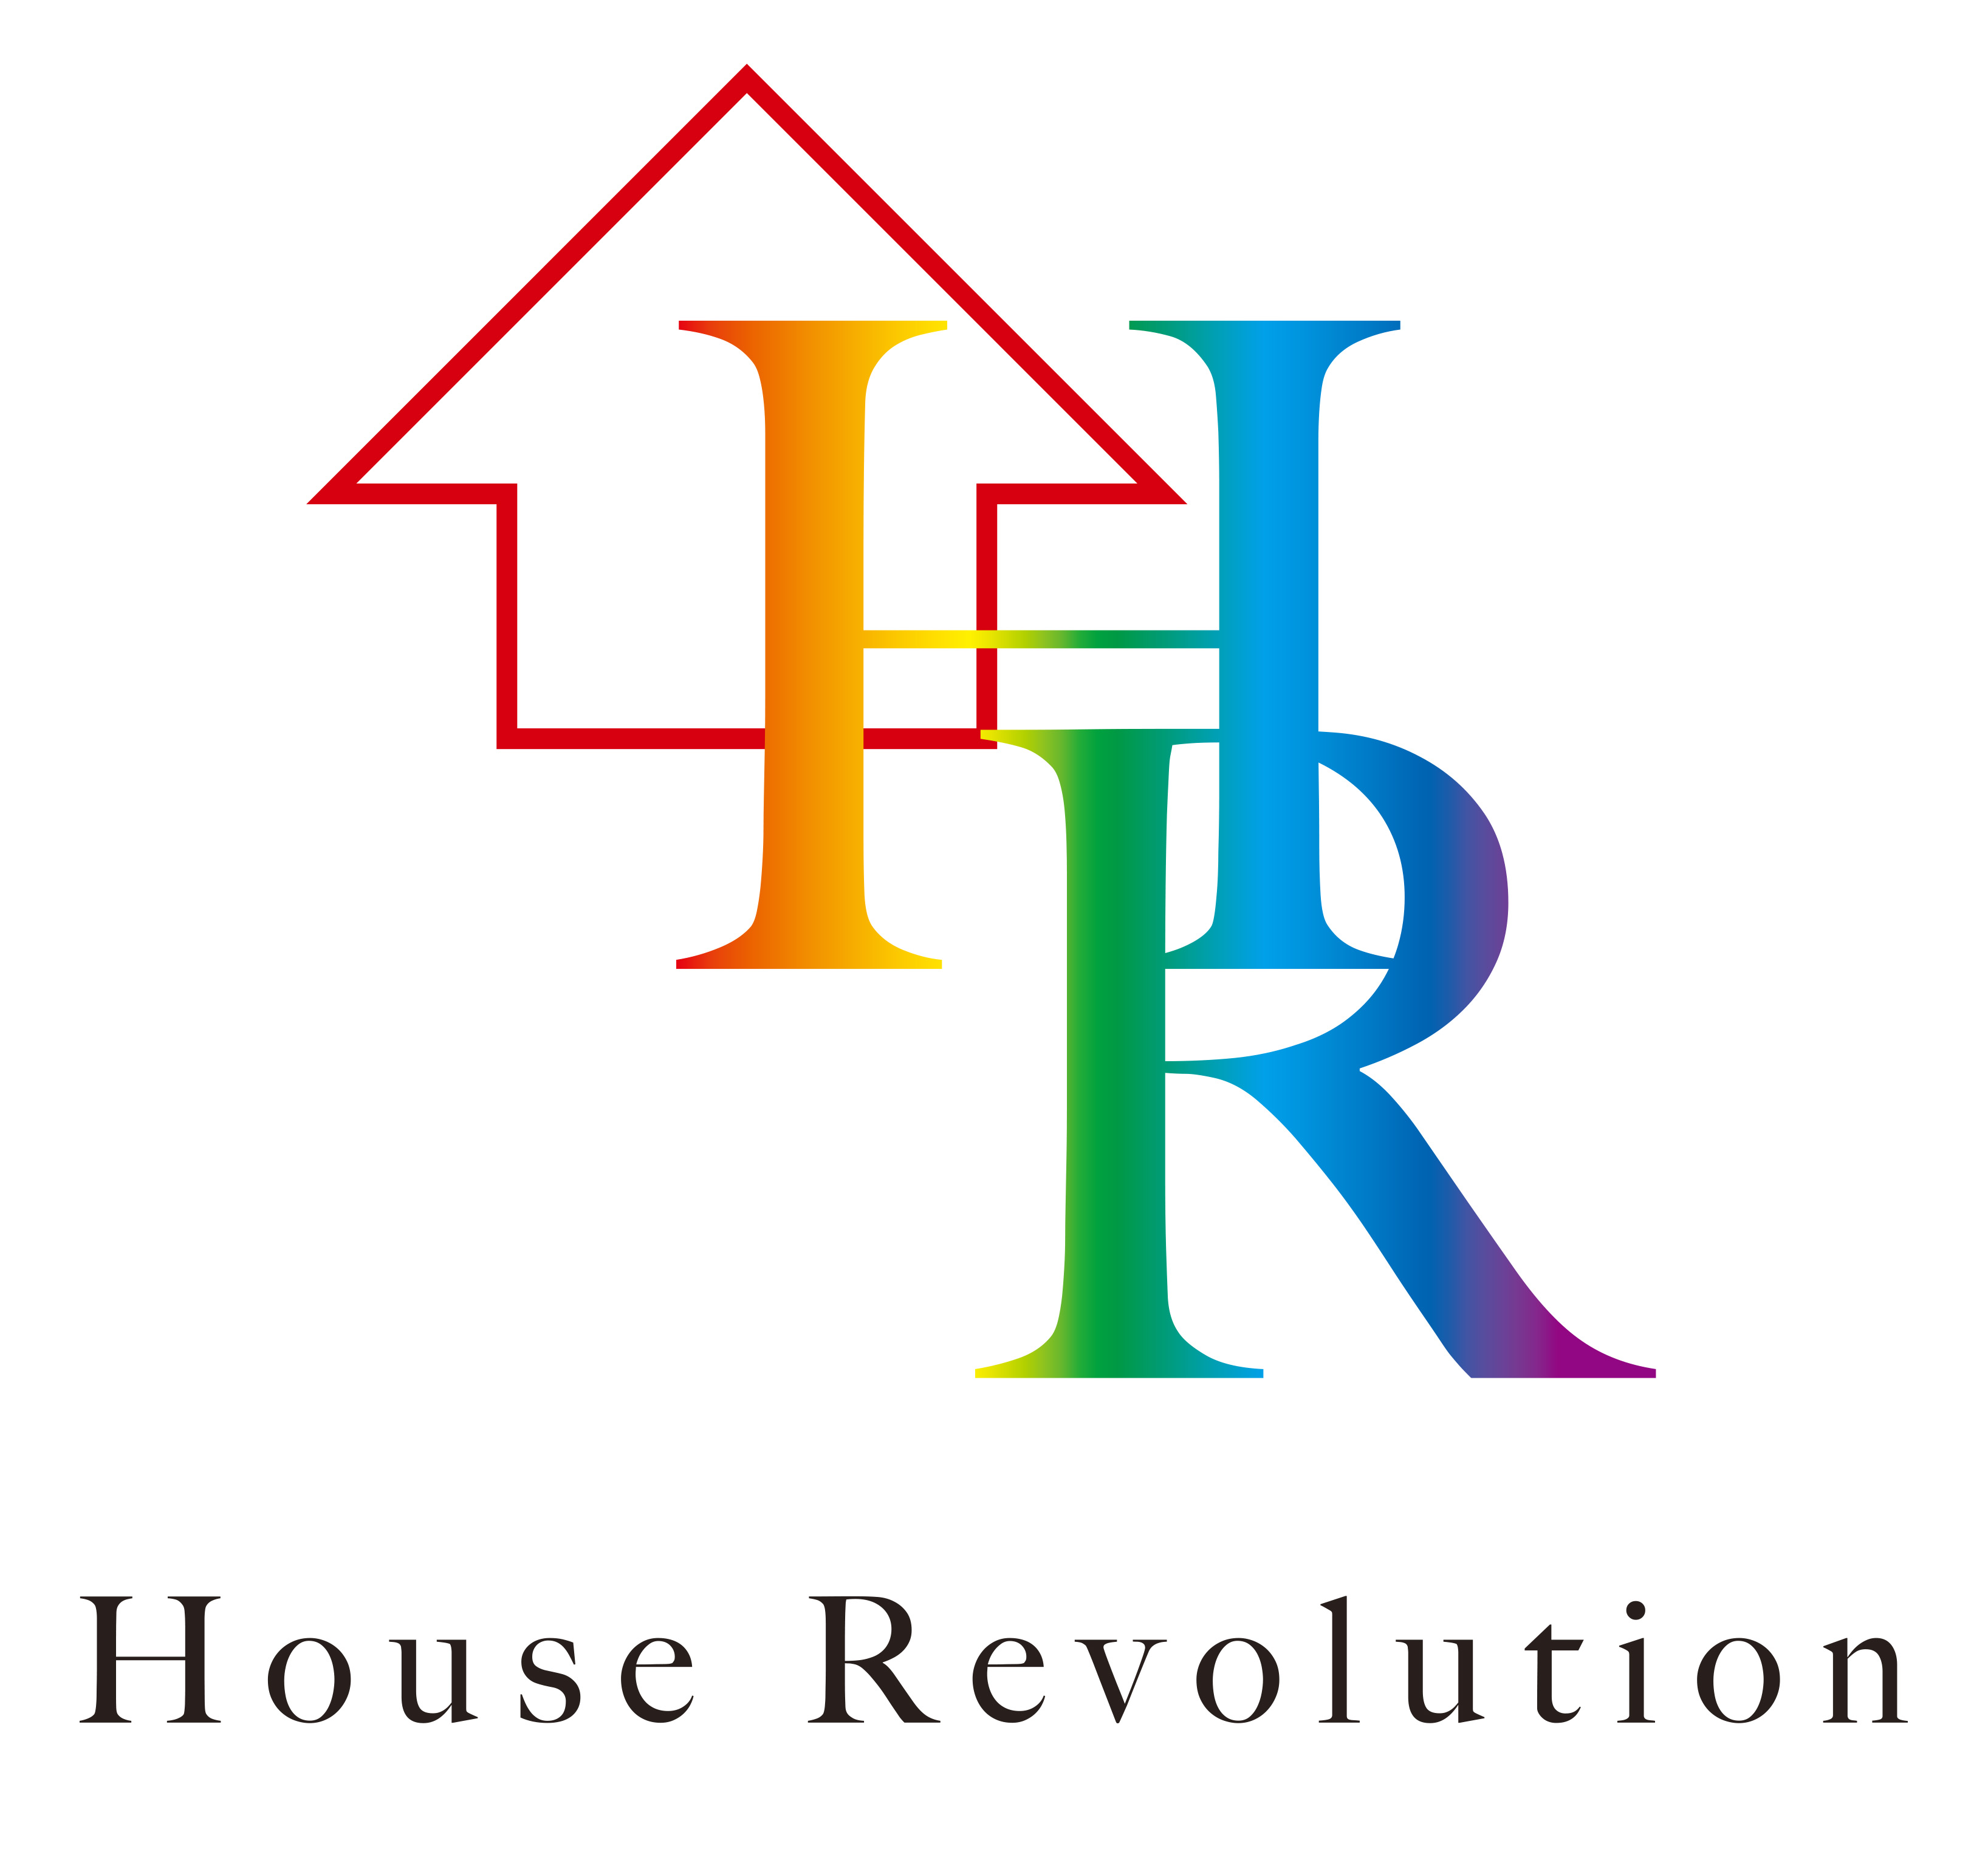 HouseRevolution